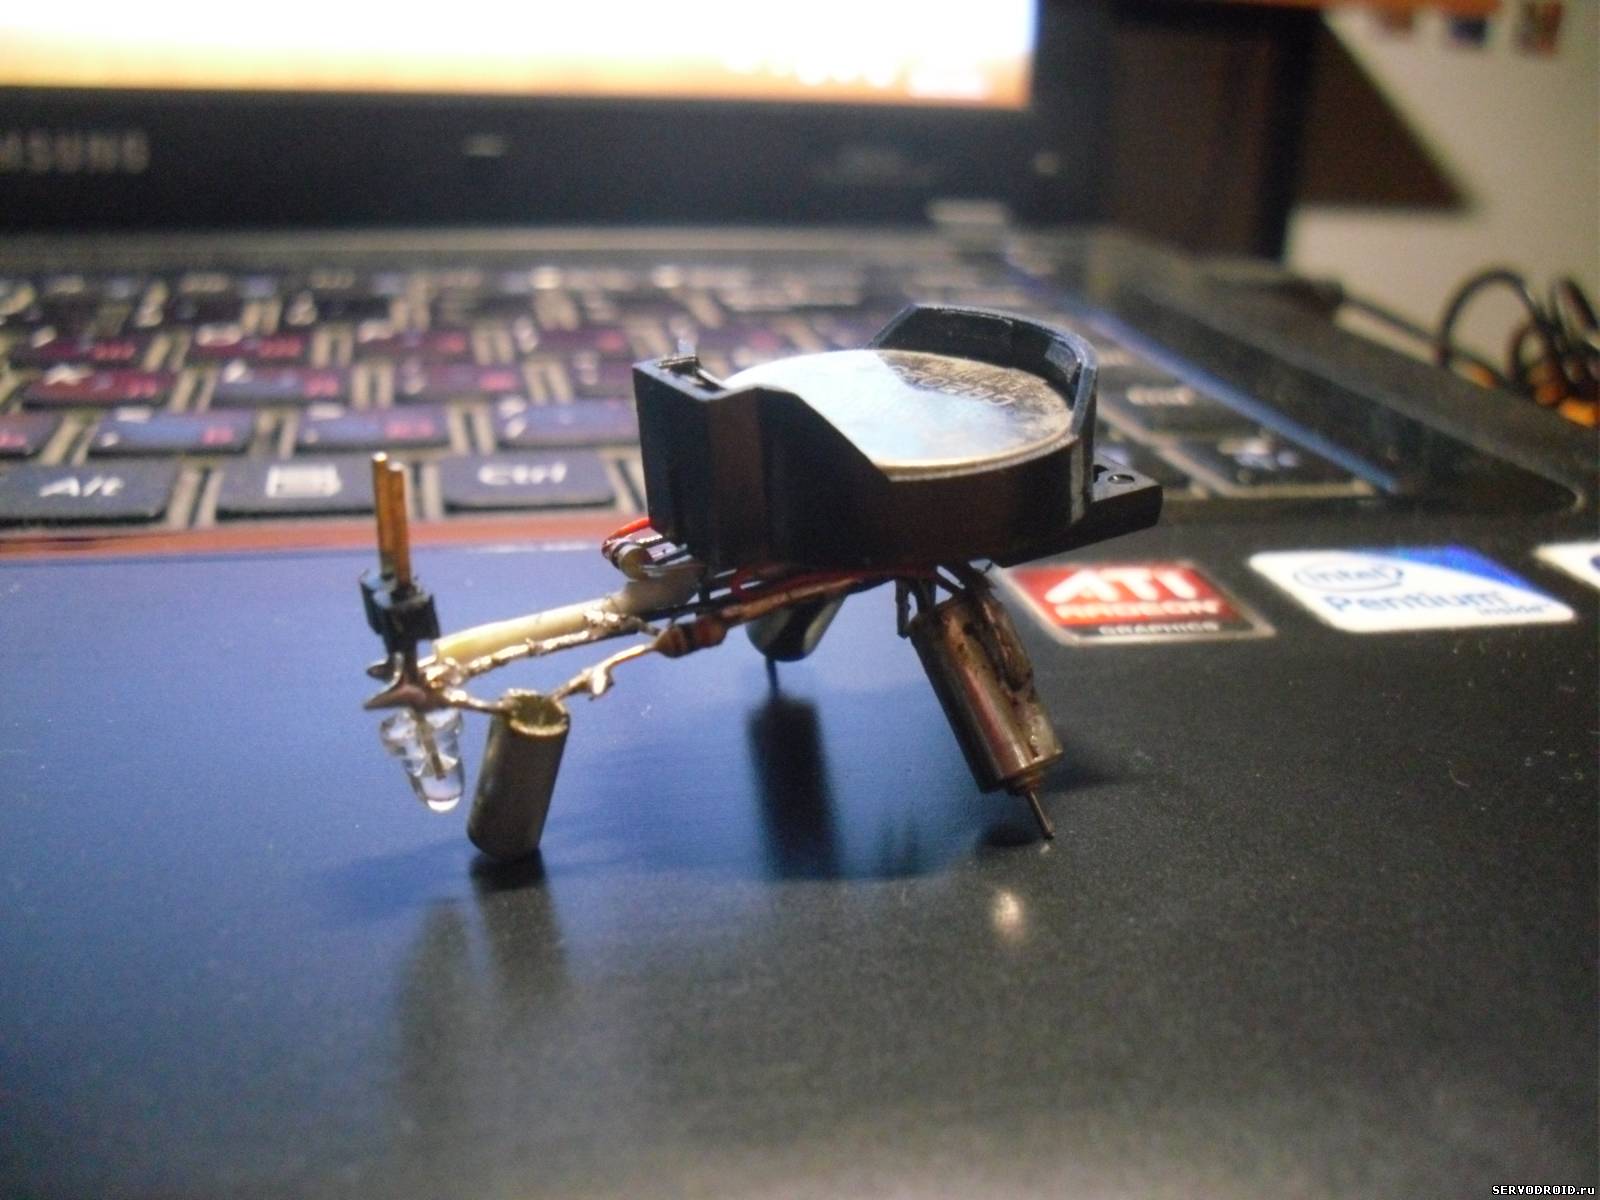 MicroLineTrecer-микро робот, бегающий по линии